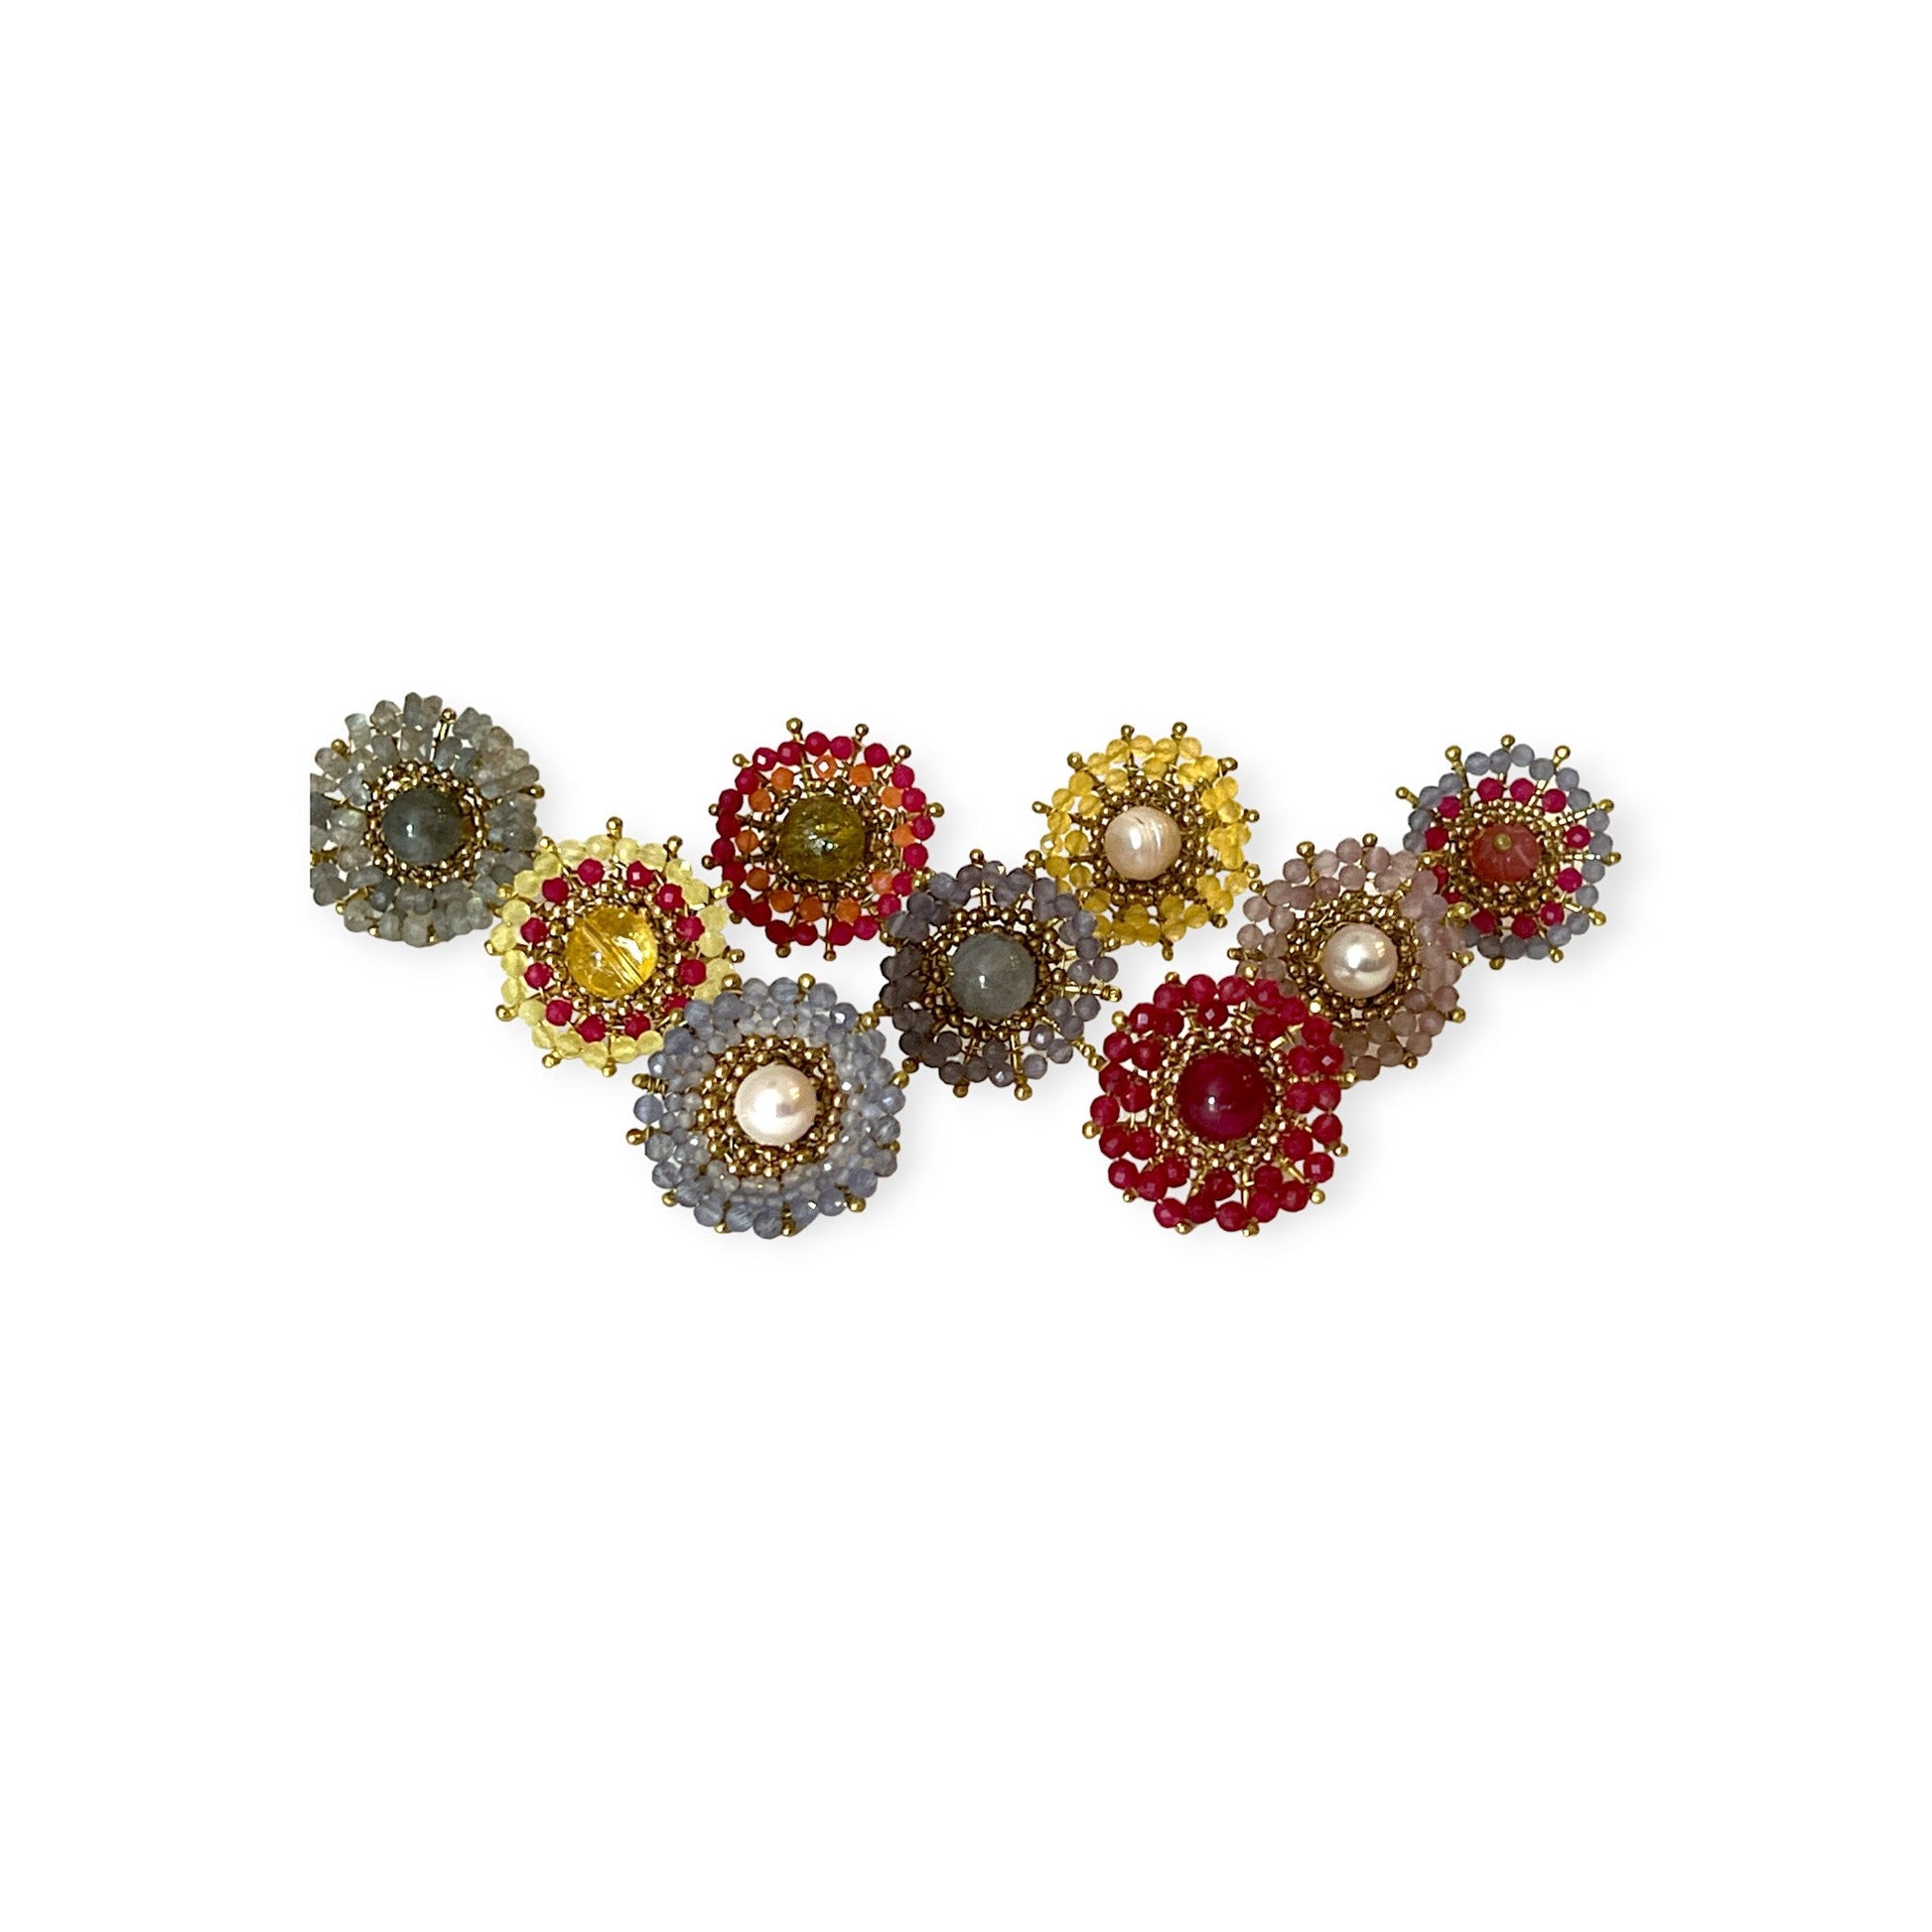 Colorful floral pattern ring - Sundara Joon